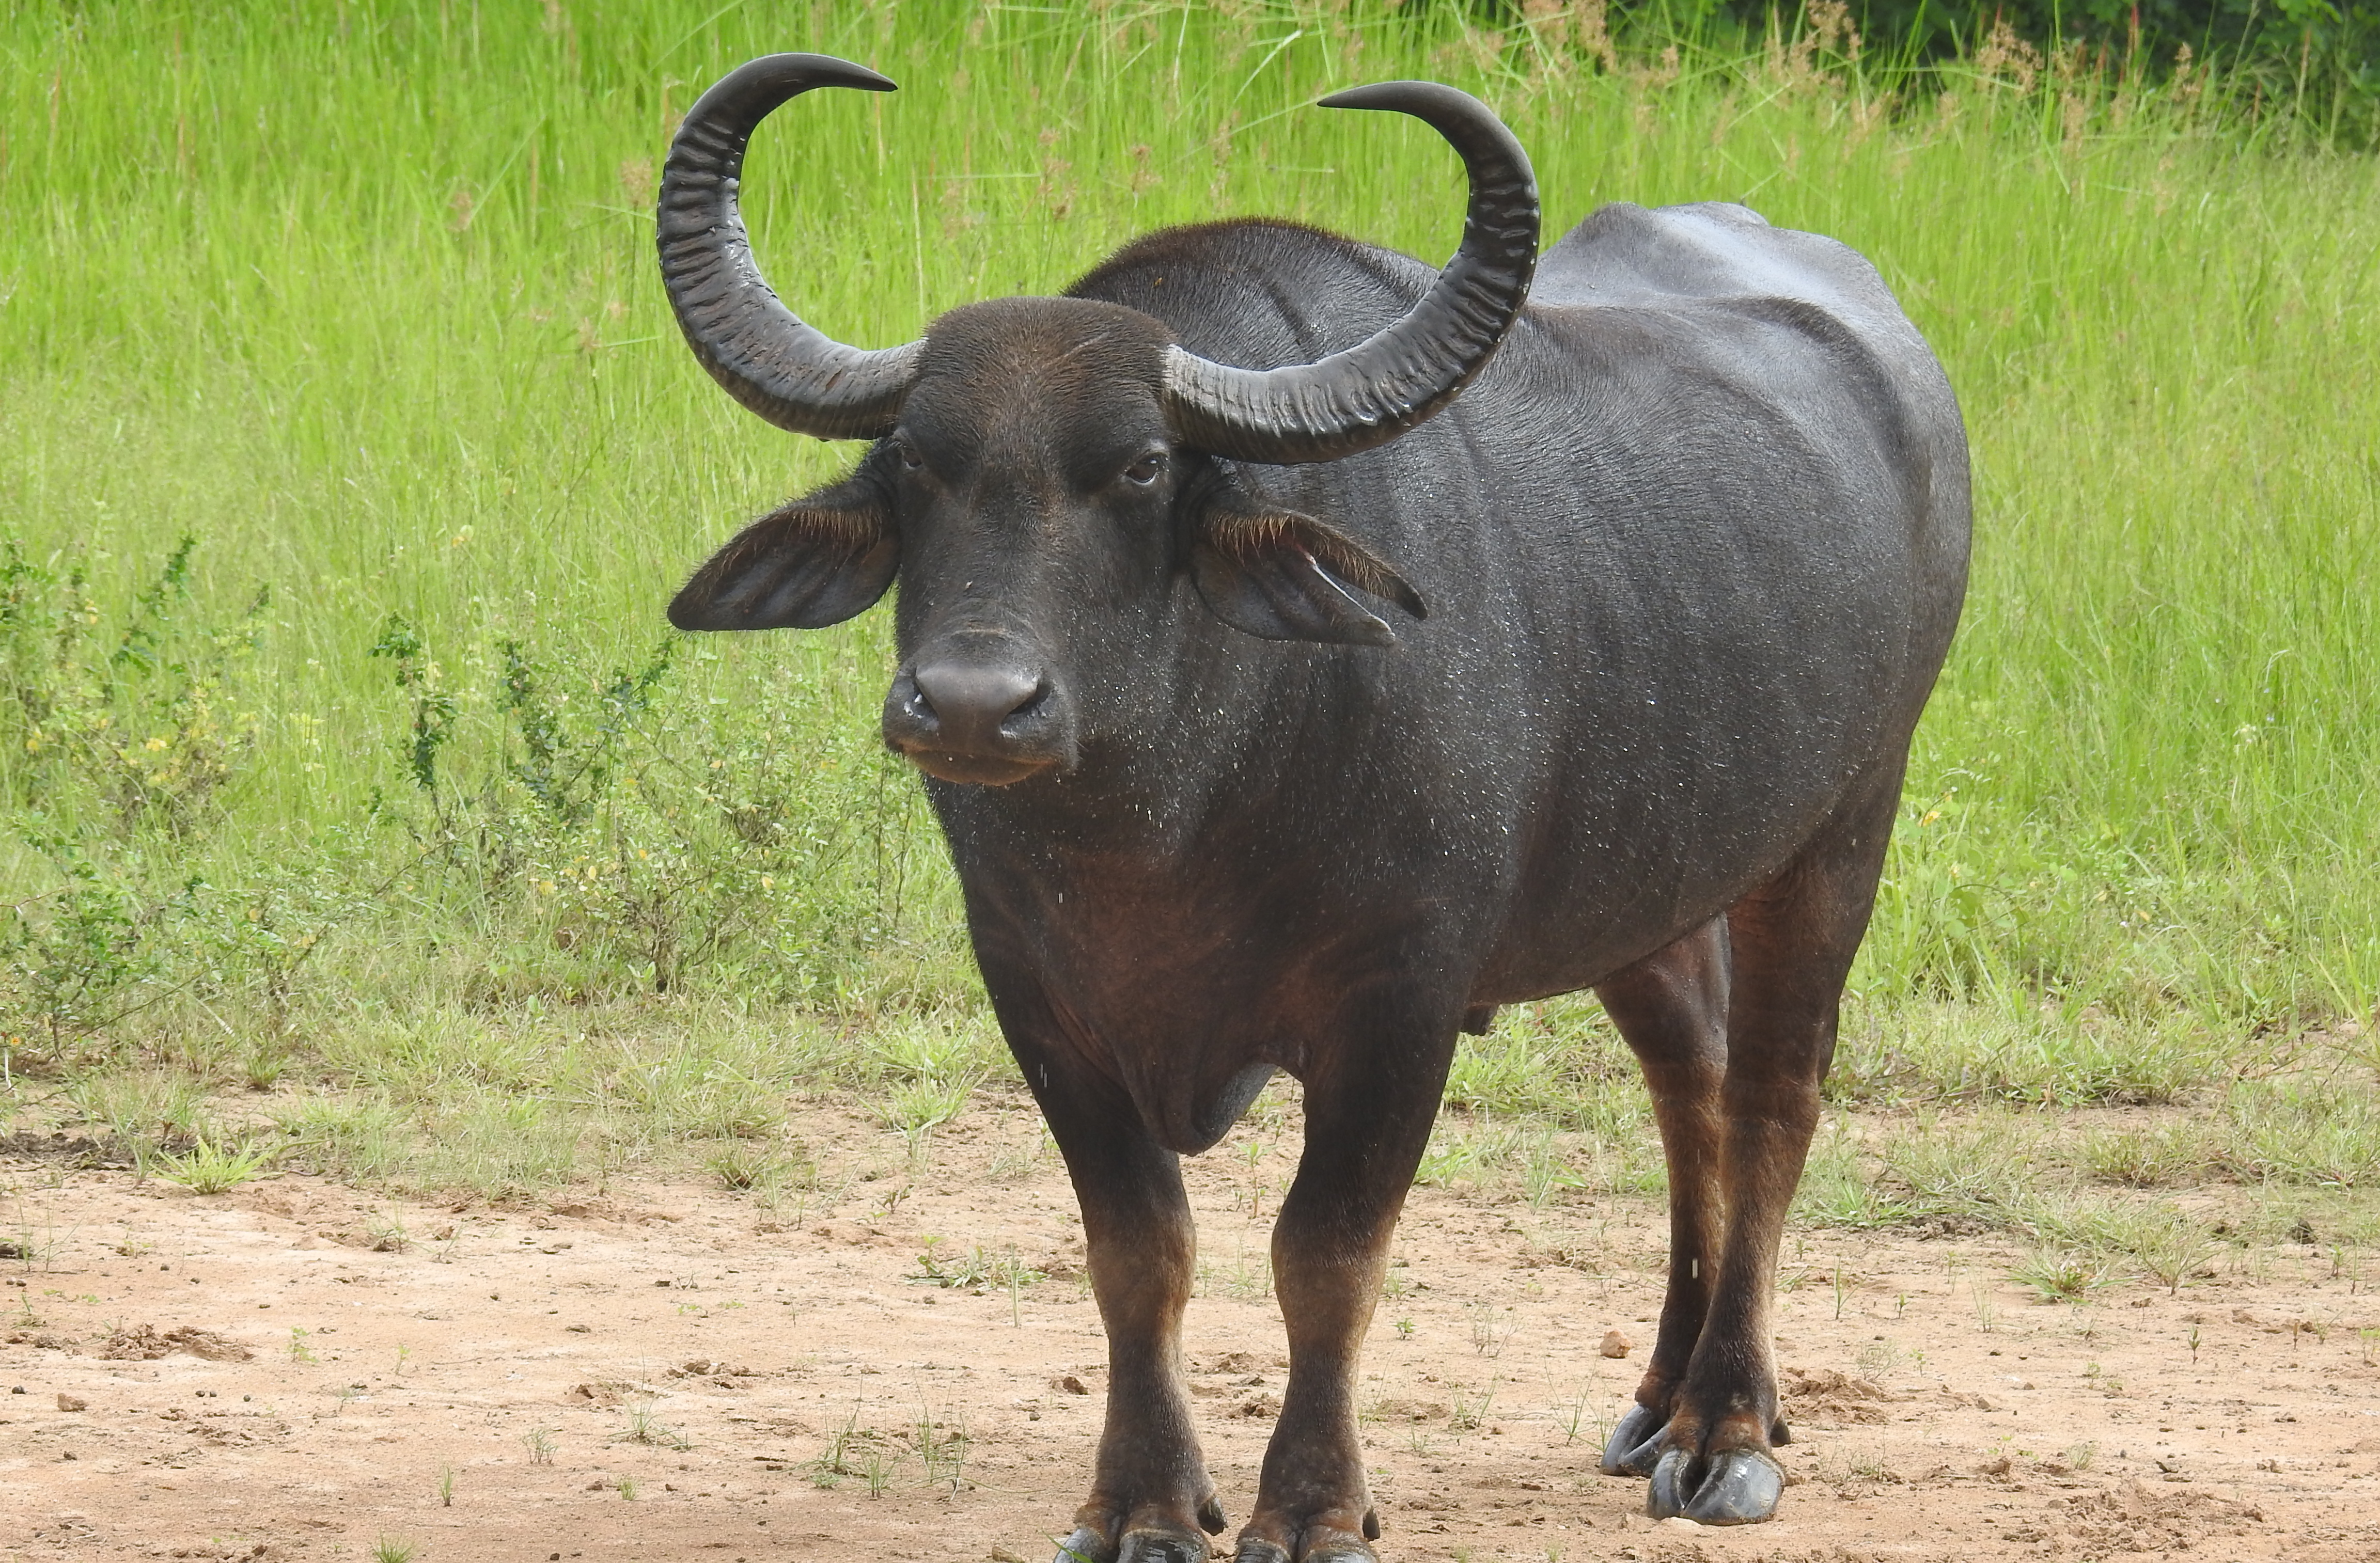 Wild water buffalo - Wikipedia